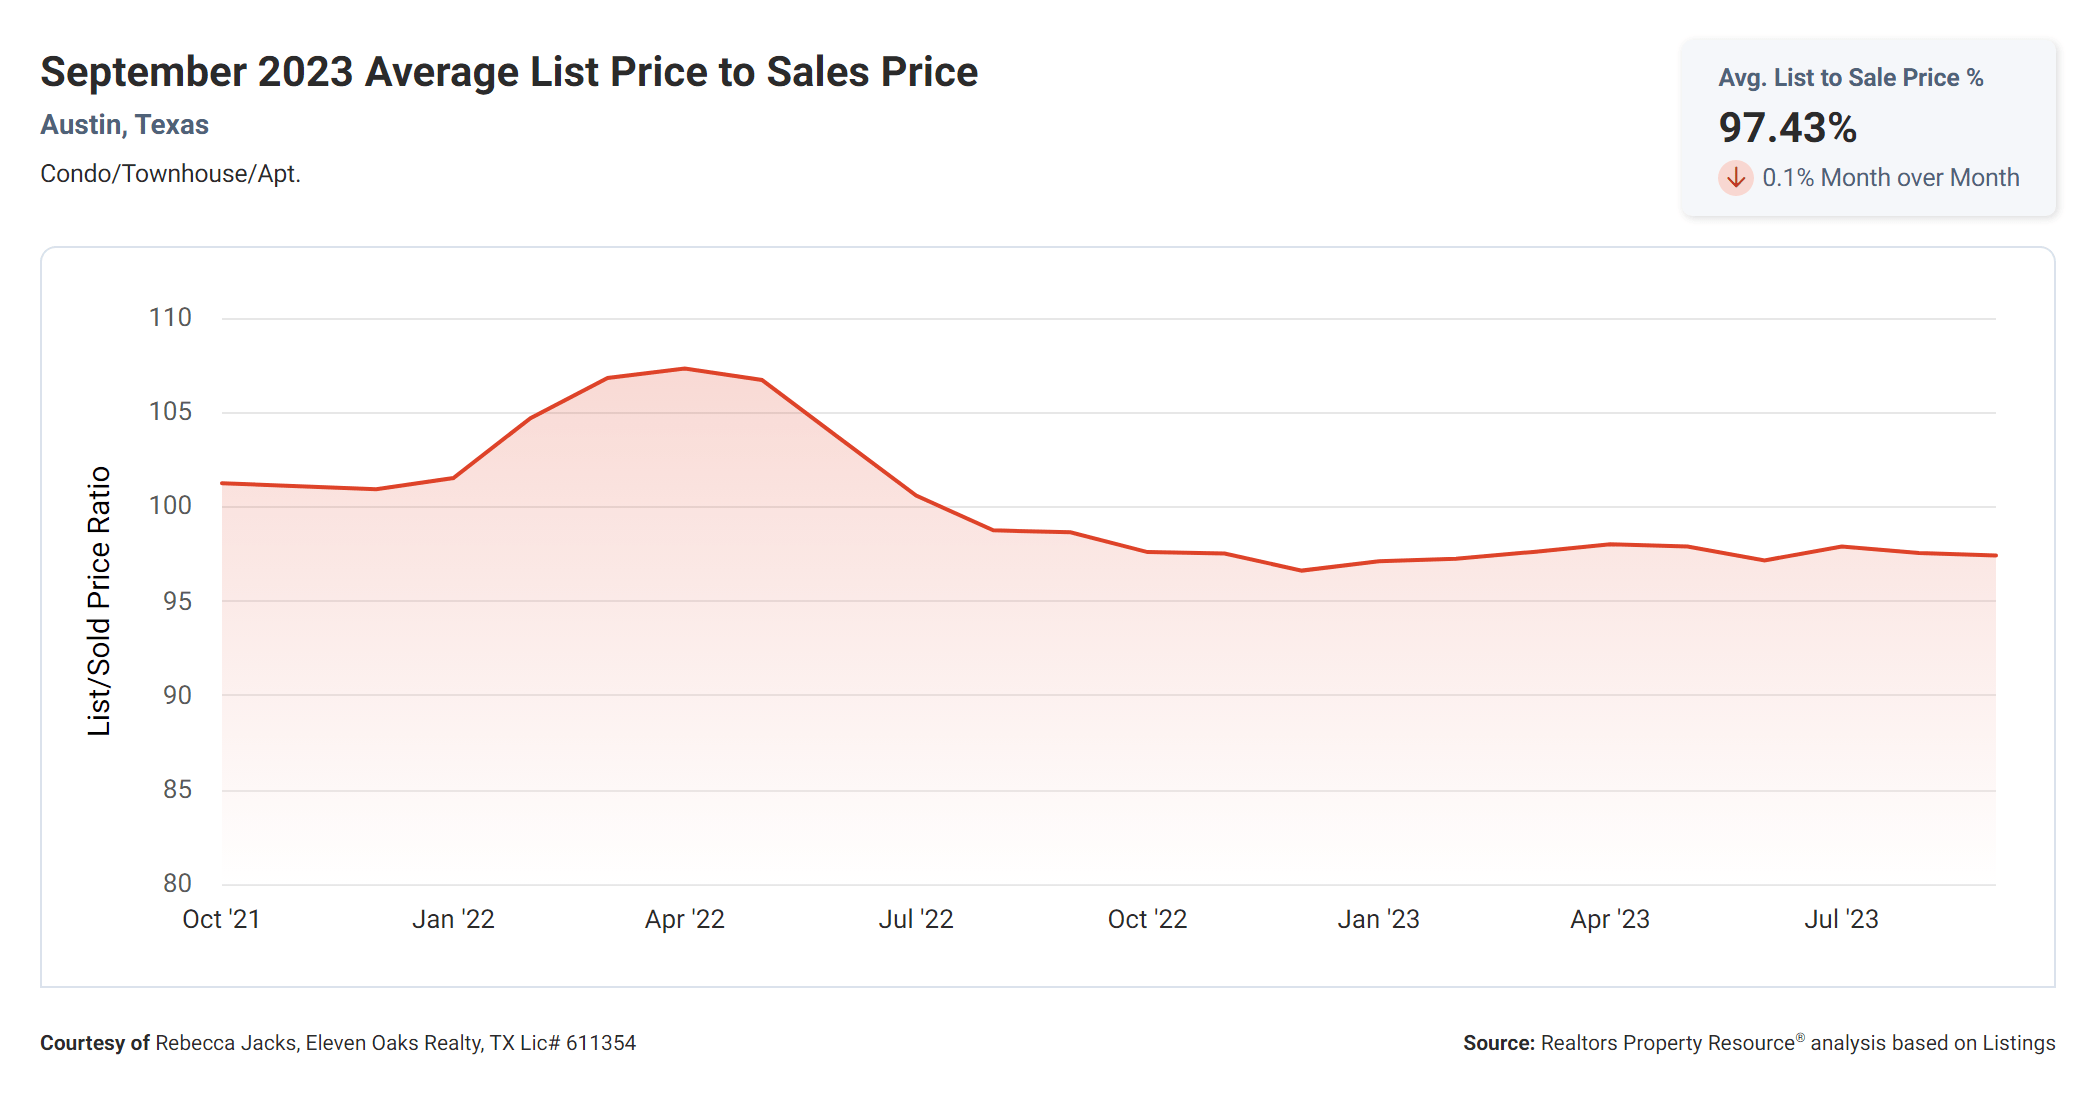 September 2023 austin tx condos average list price to sales price